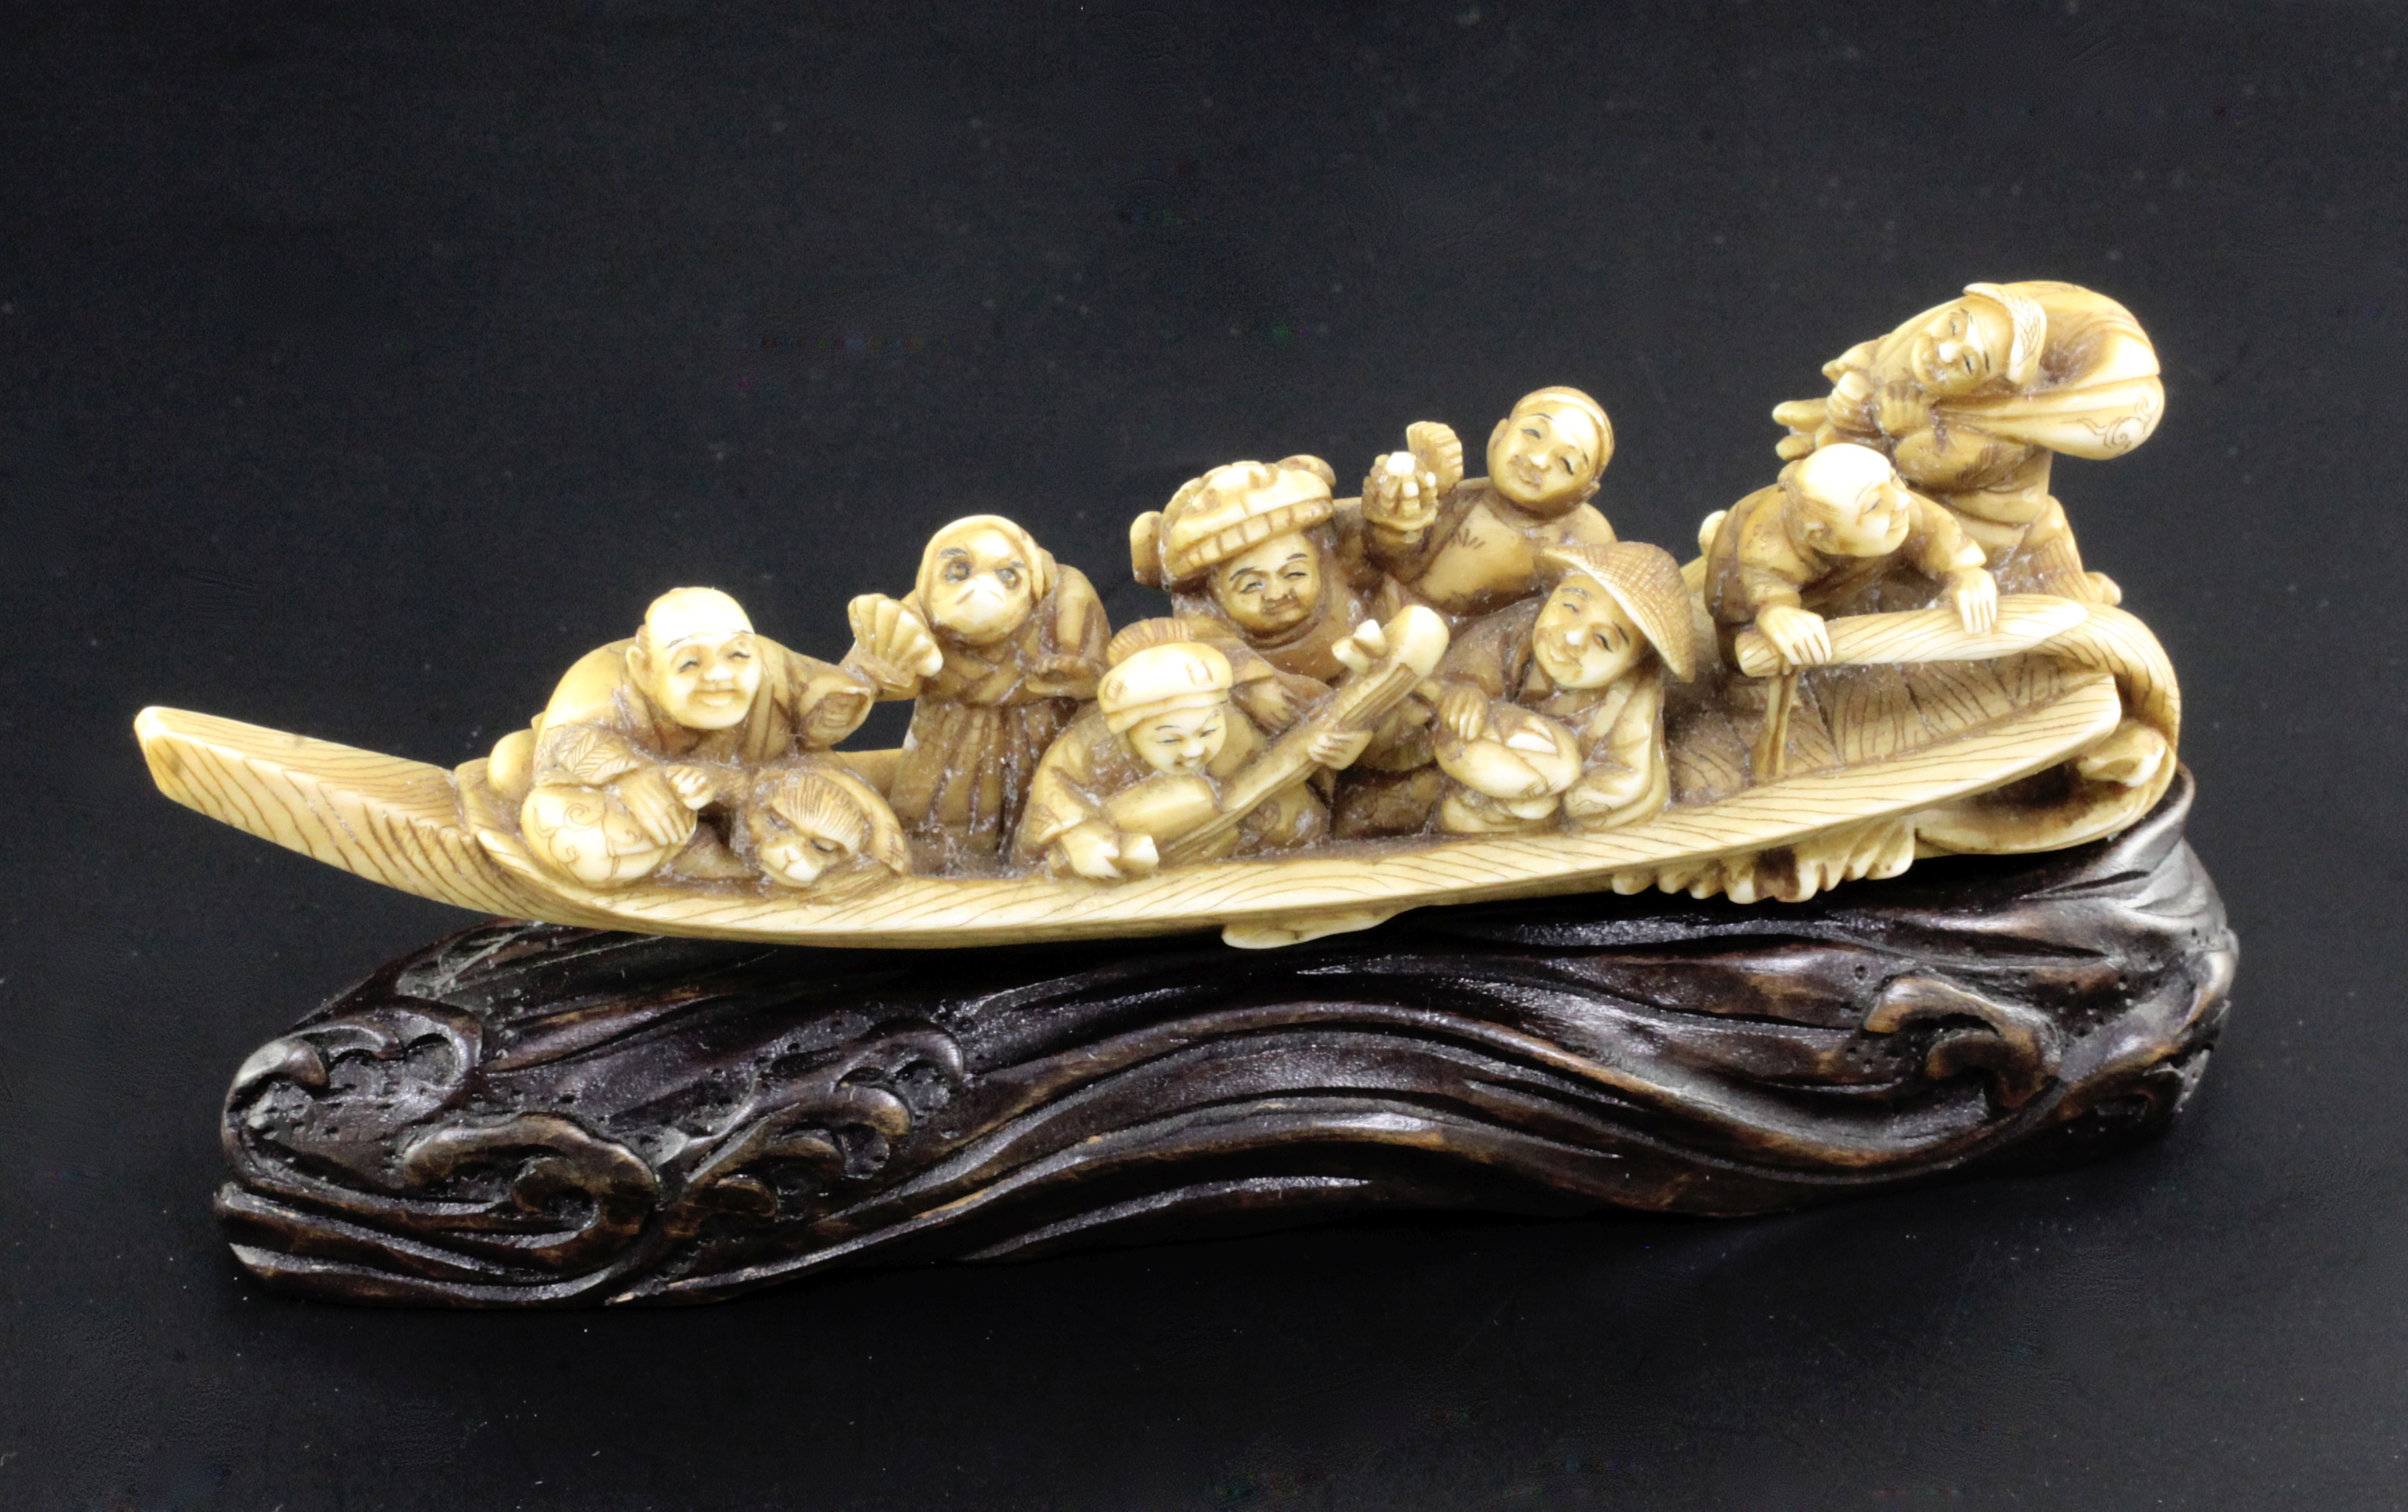 A Japanese ivory okimono of figures enjoying festivities on a boat, Meiji period, playing music